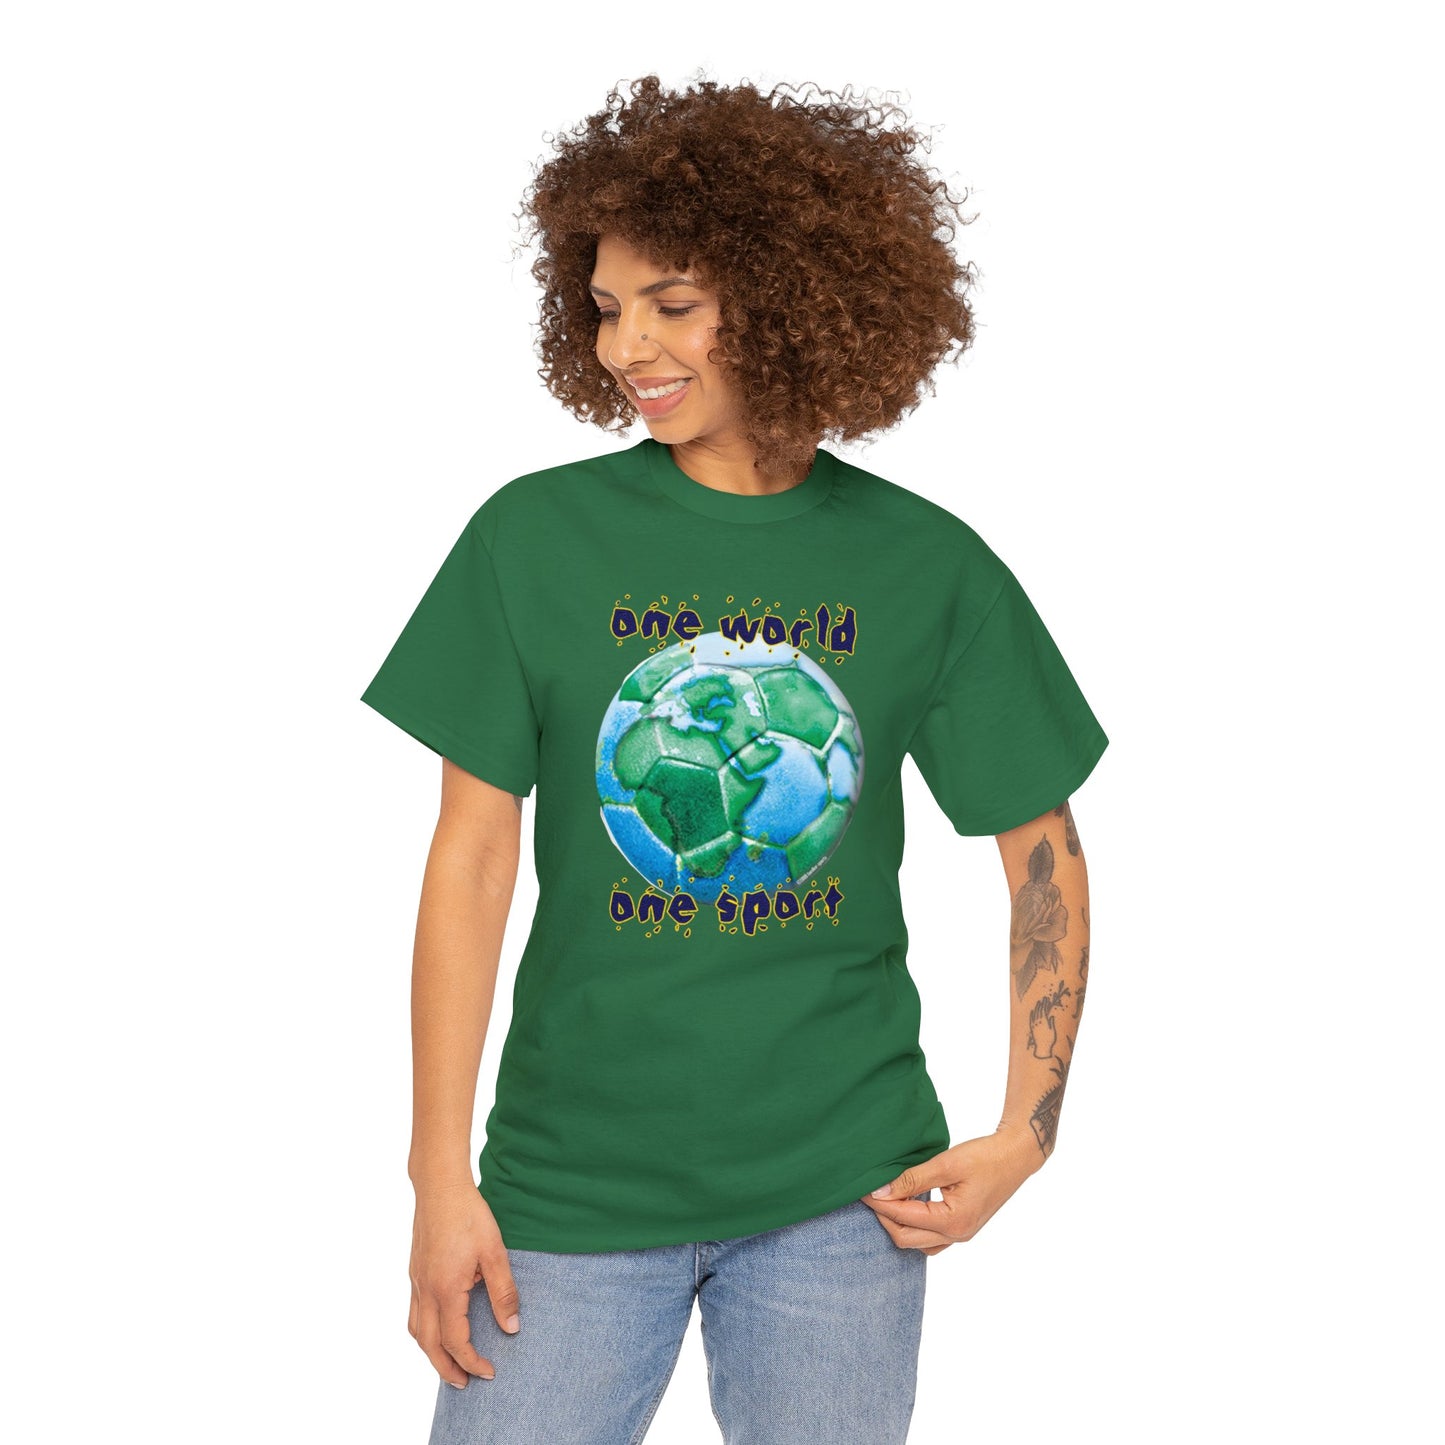 One World One Sport, Soccer Ball, Planet Earth soccer T-Shirt, Soccer is the World Sport, Bright Fun Positive Soccer T-Shirt Design